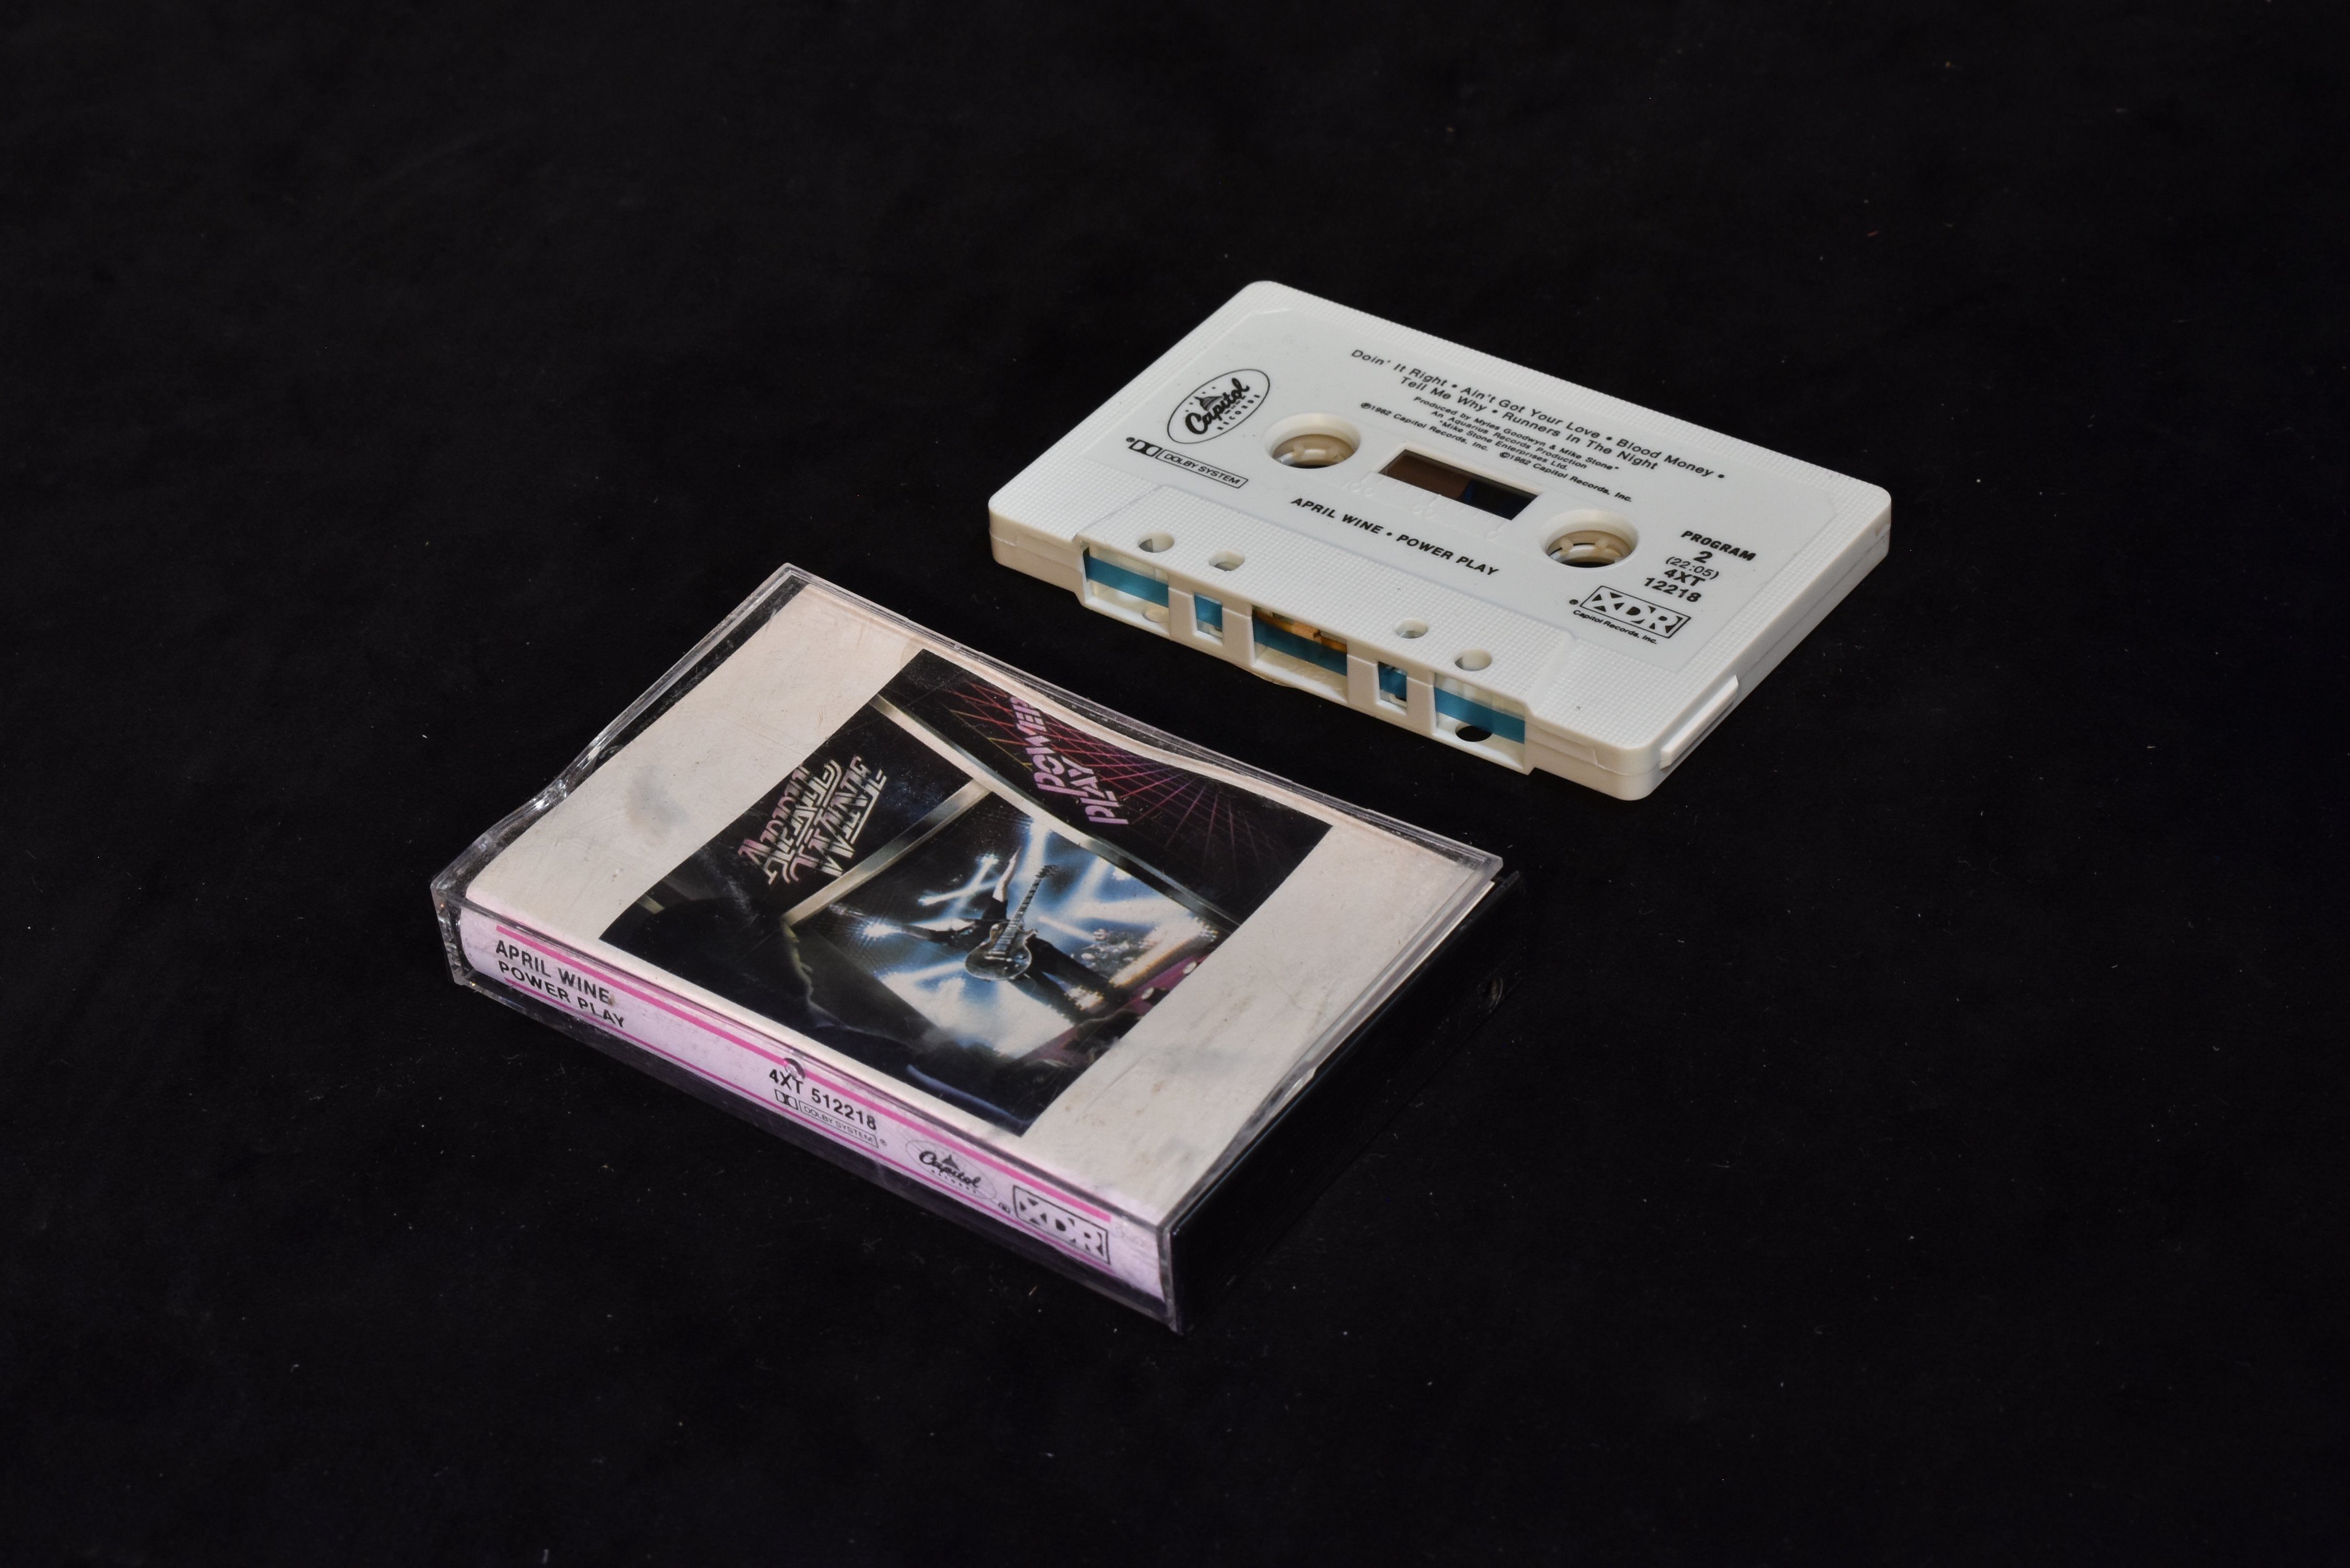 April Wine PowerPlay cassette tape used